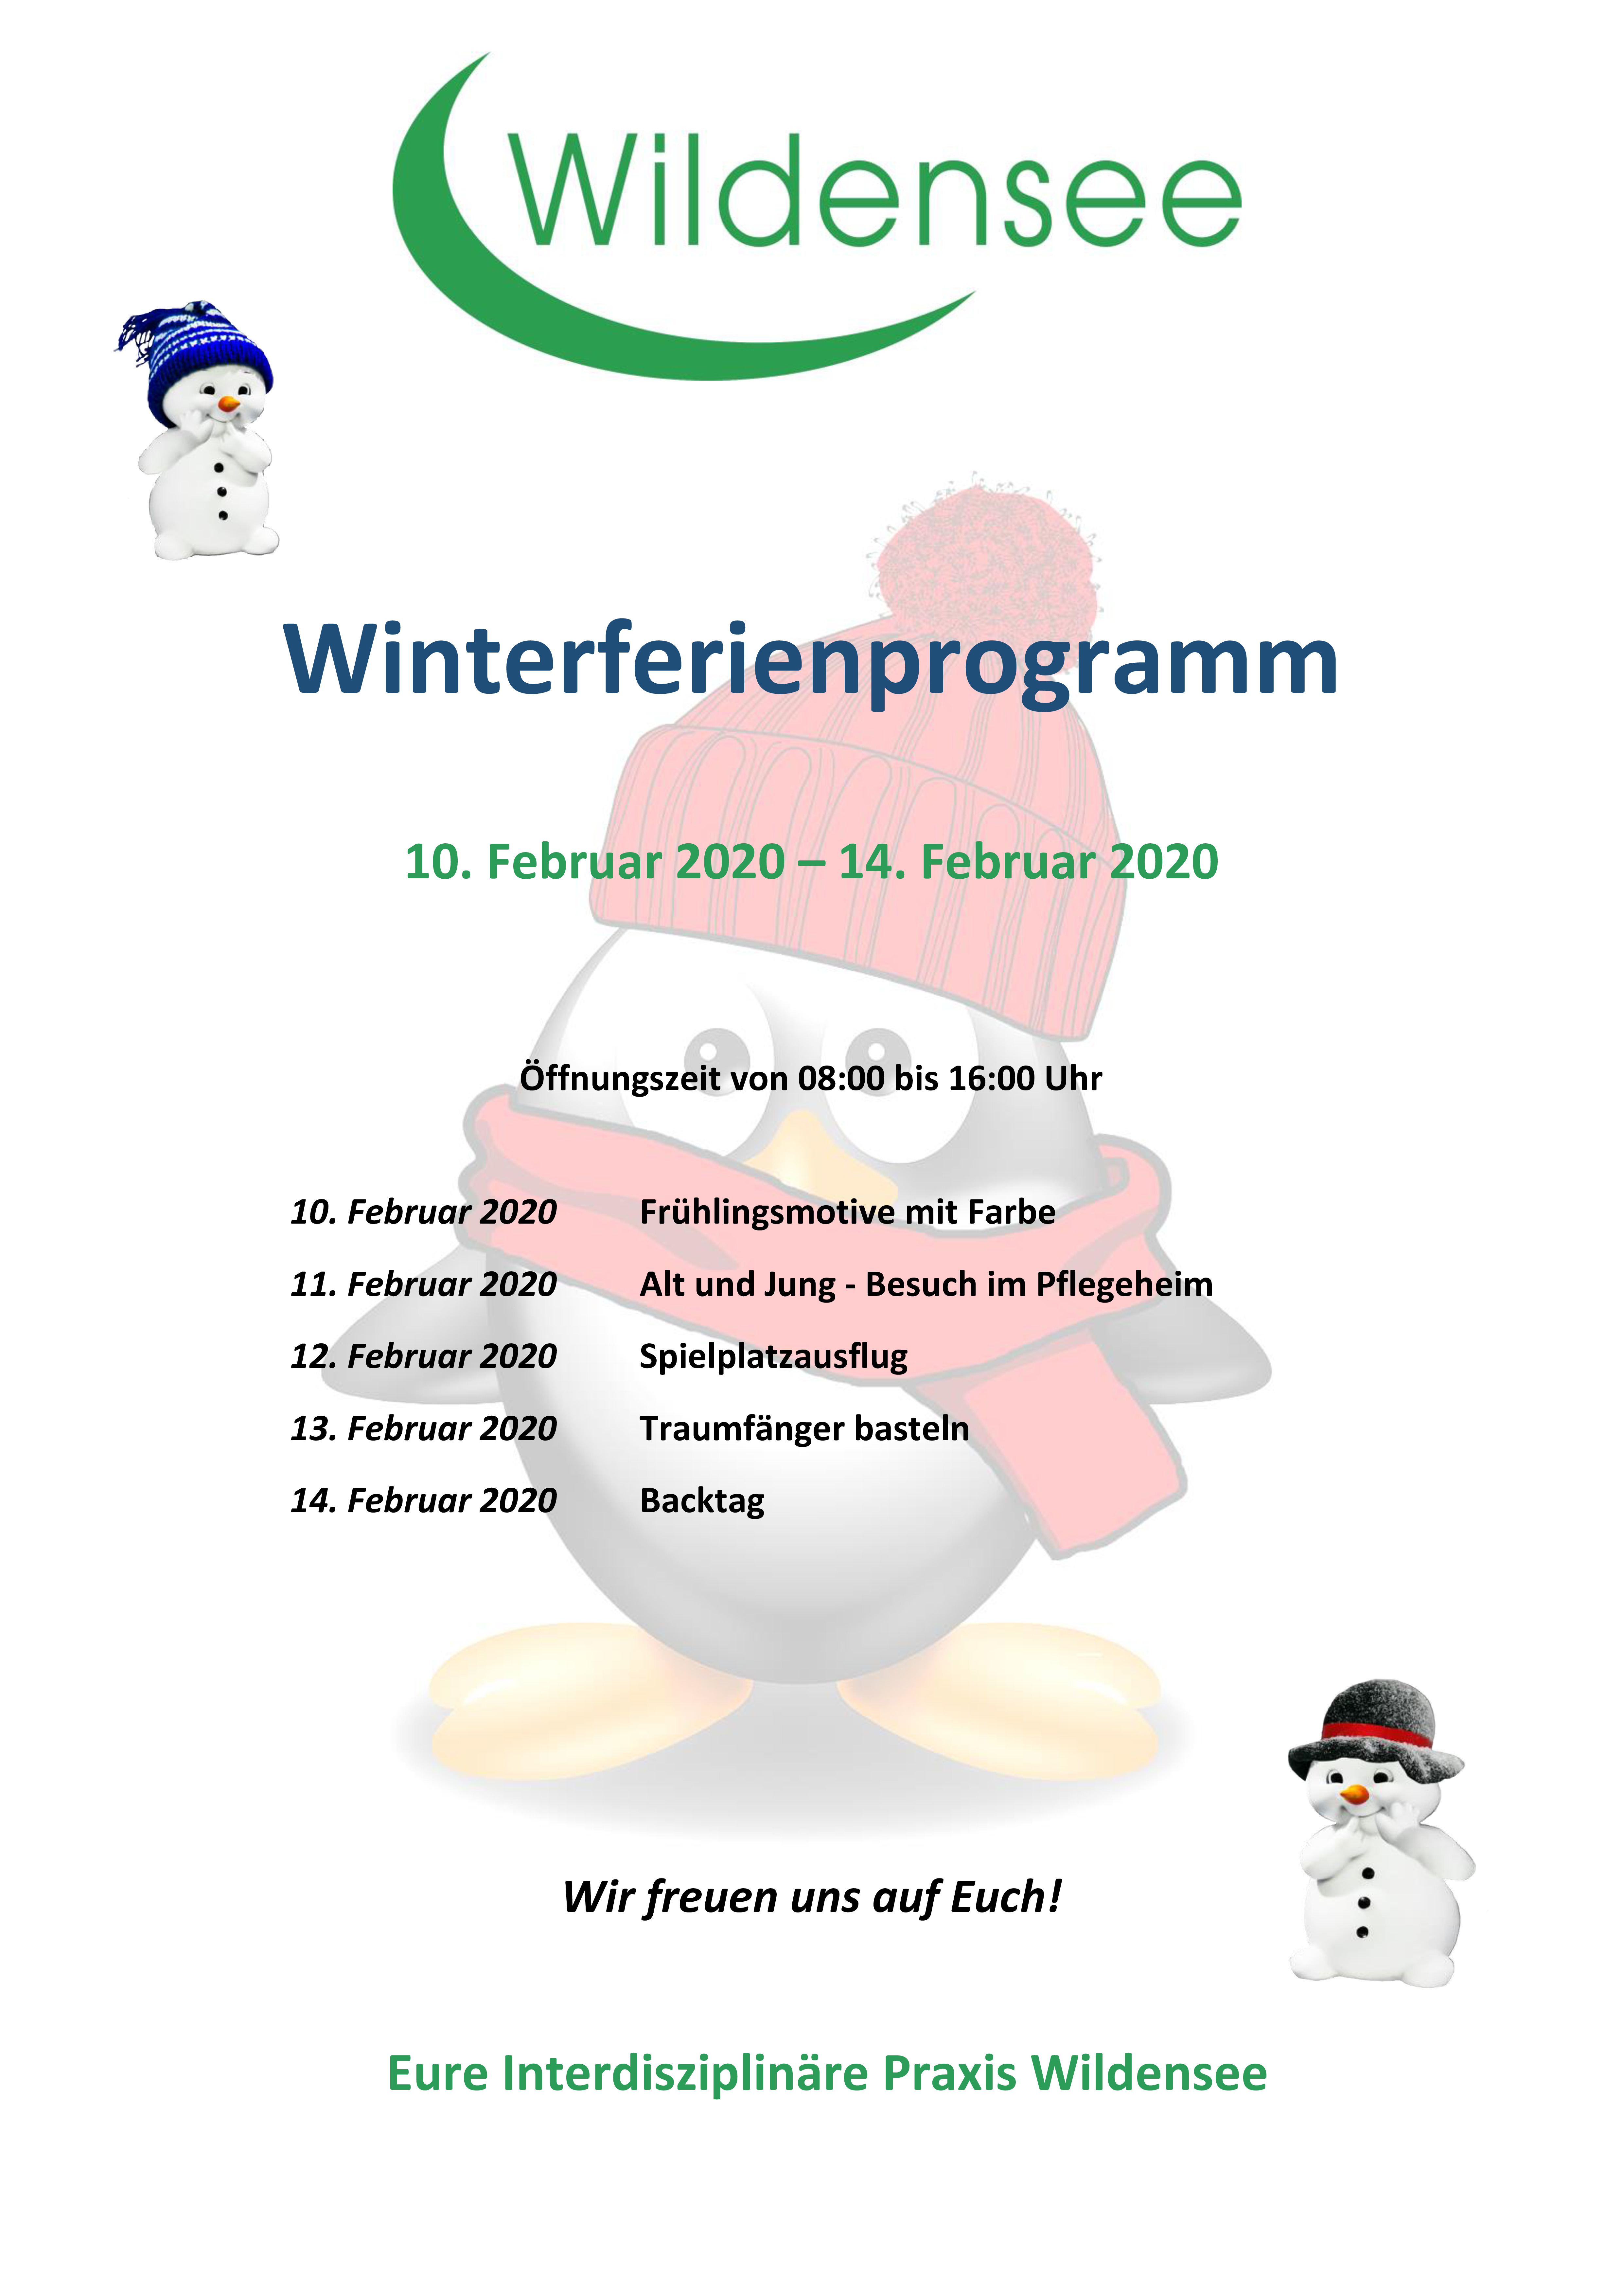 Winterferienprogramm 2020